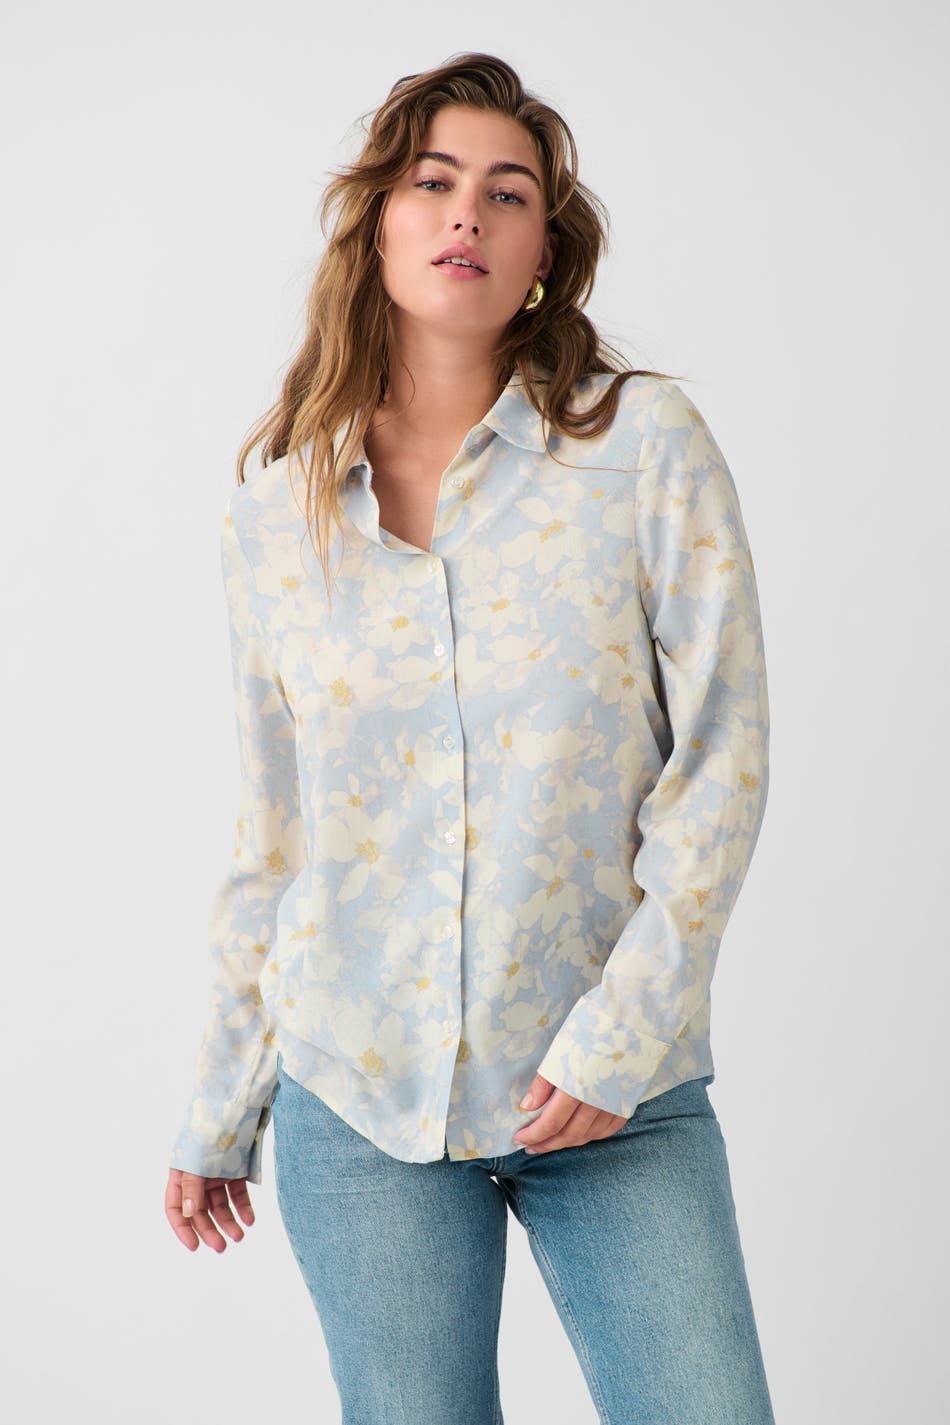 Gina Tricot - Viscose shirt - skjortor - Yellow - L - Female